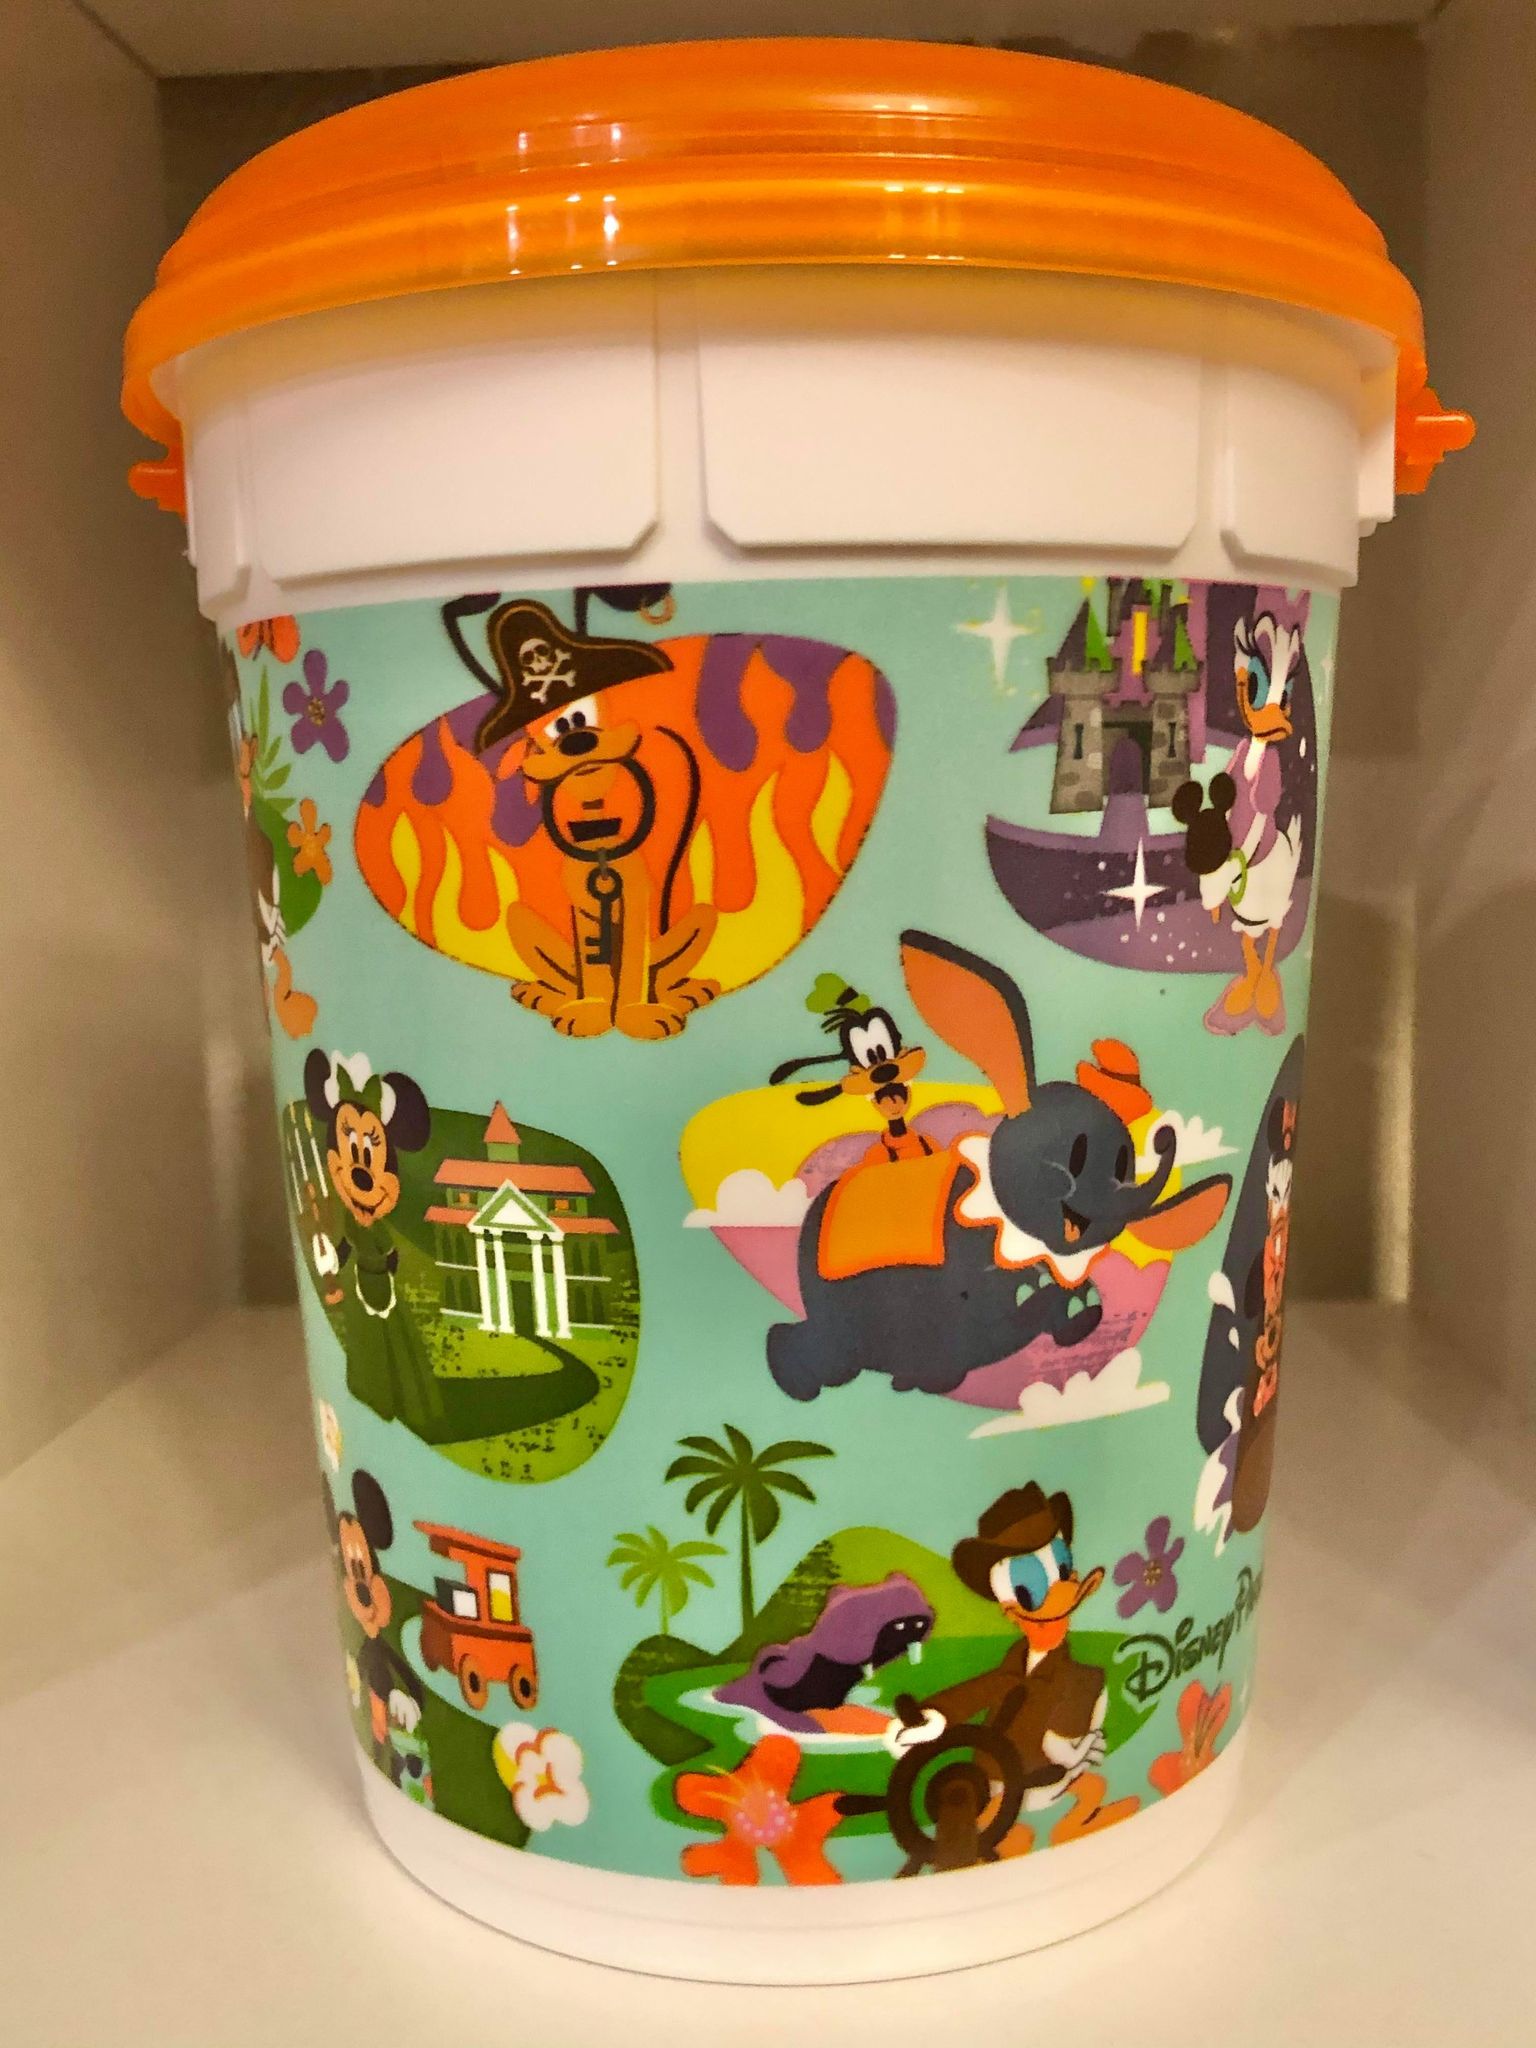 The new Disney Attractions Popcorn Bucket Is Too Cute